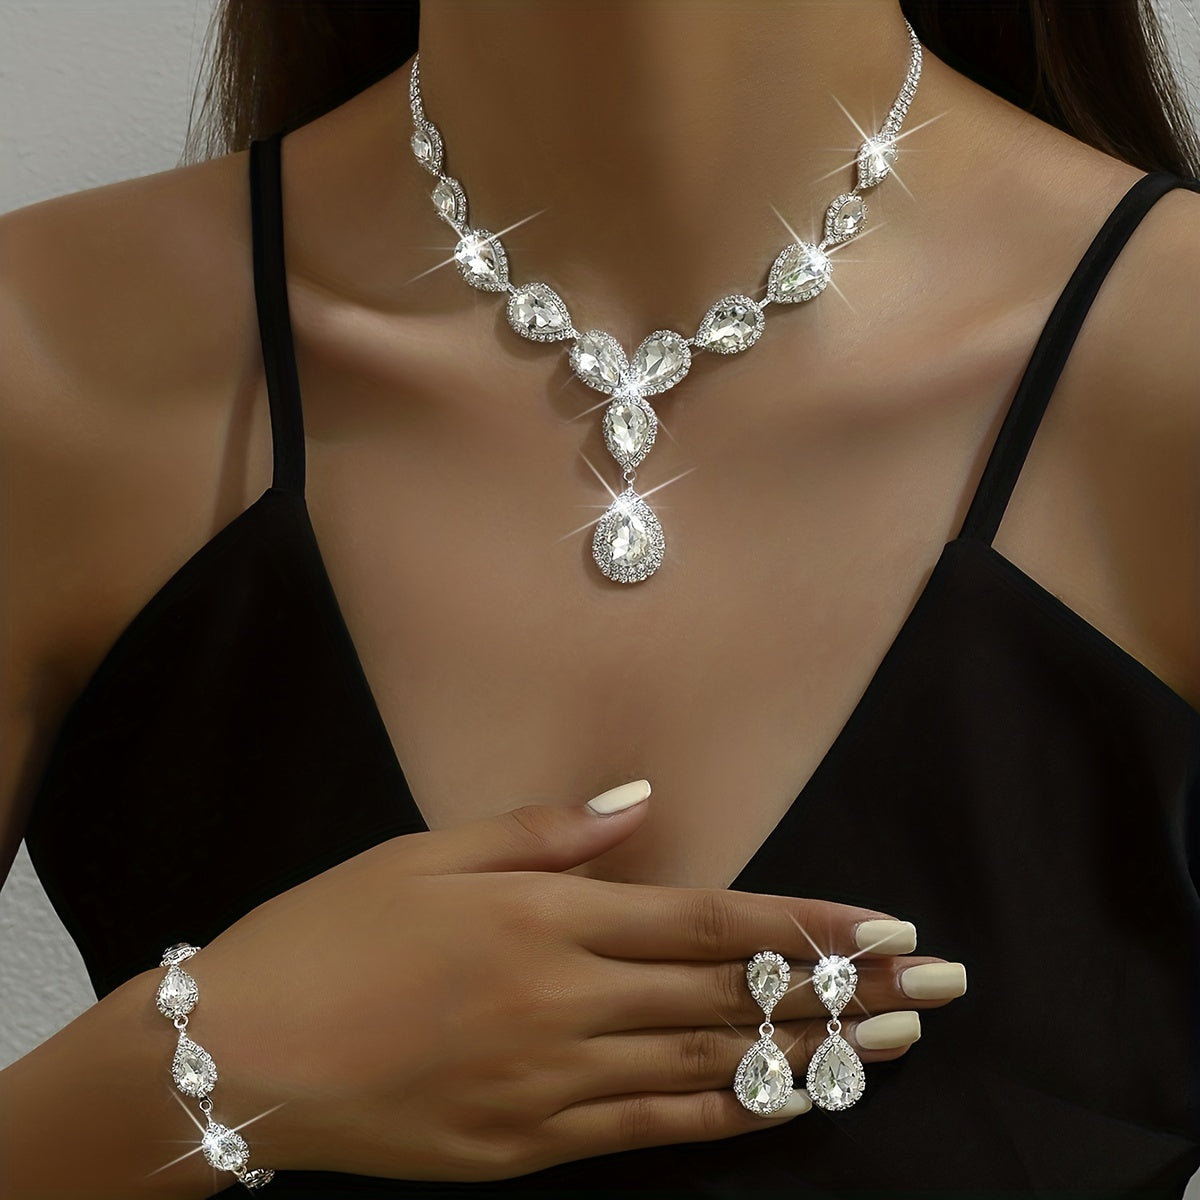 4pcs Earrings Necklace Plus Bracelet Elegant Jewelry Set Silver Plated Inlaid Rhinestone Engagement Wedding Jewelry For Female Evening Party Decor